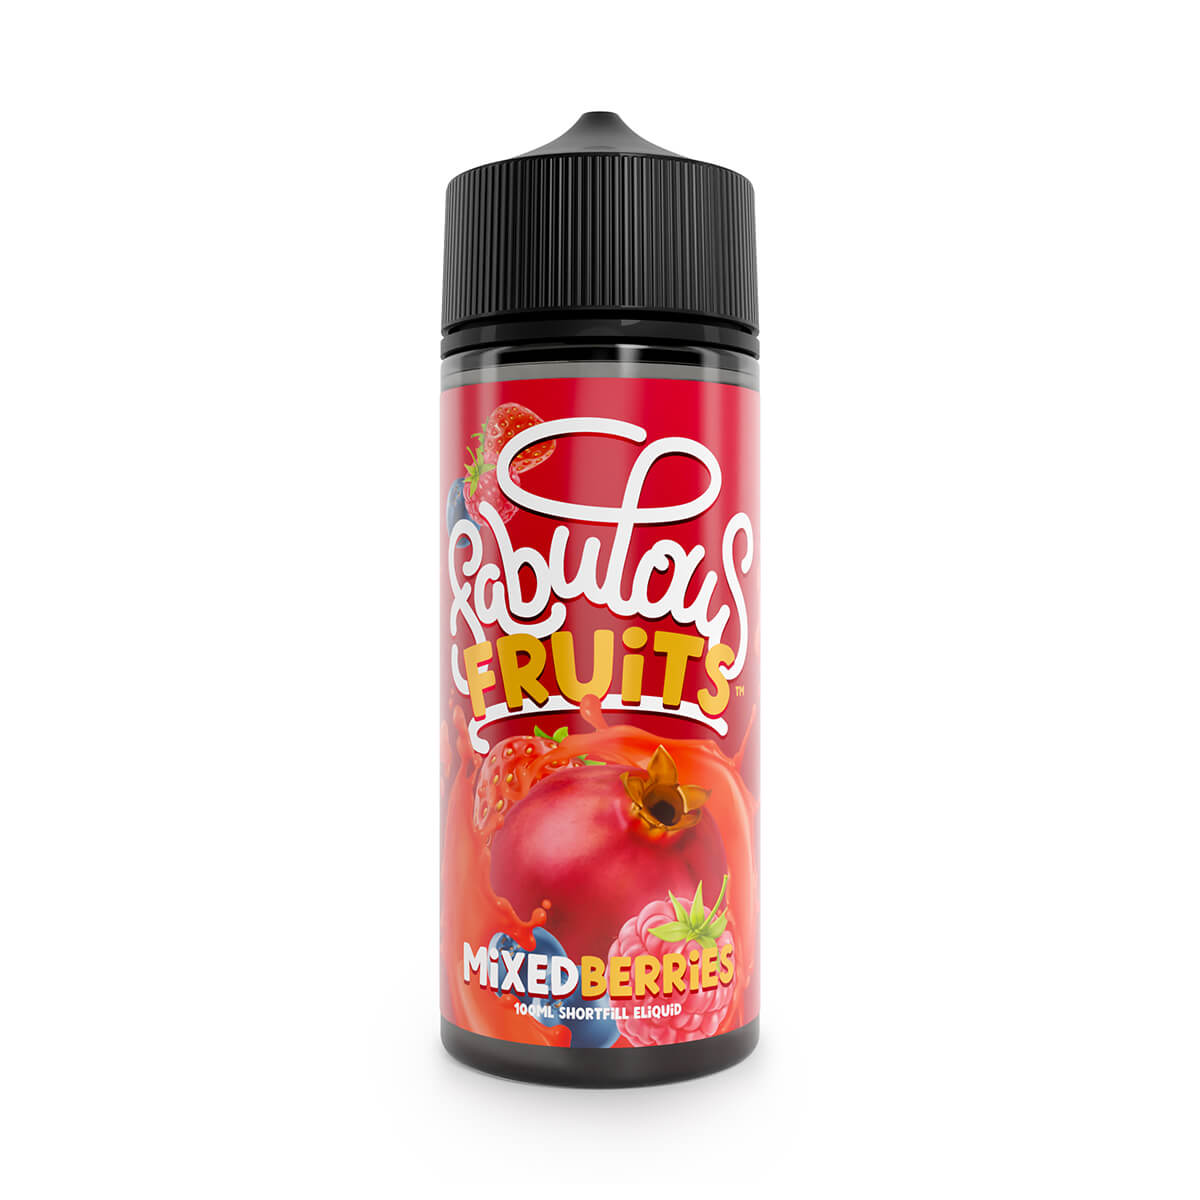 Get Your Mixed Berries 100ml Fabulous Fruits E-Liquid, Available At Dispergo Vape Shop.